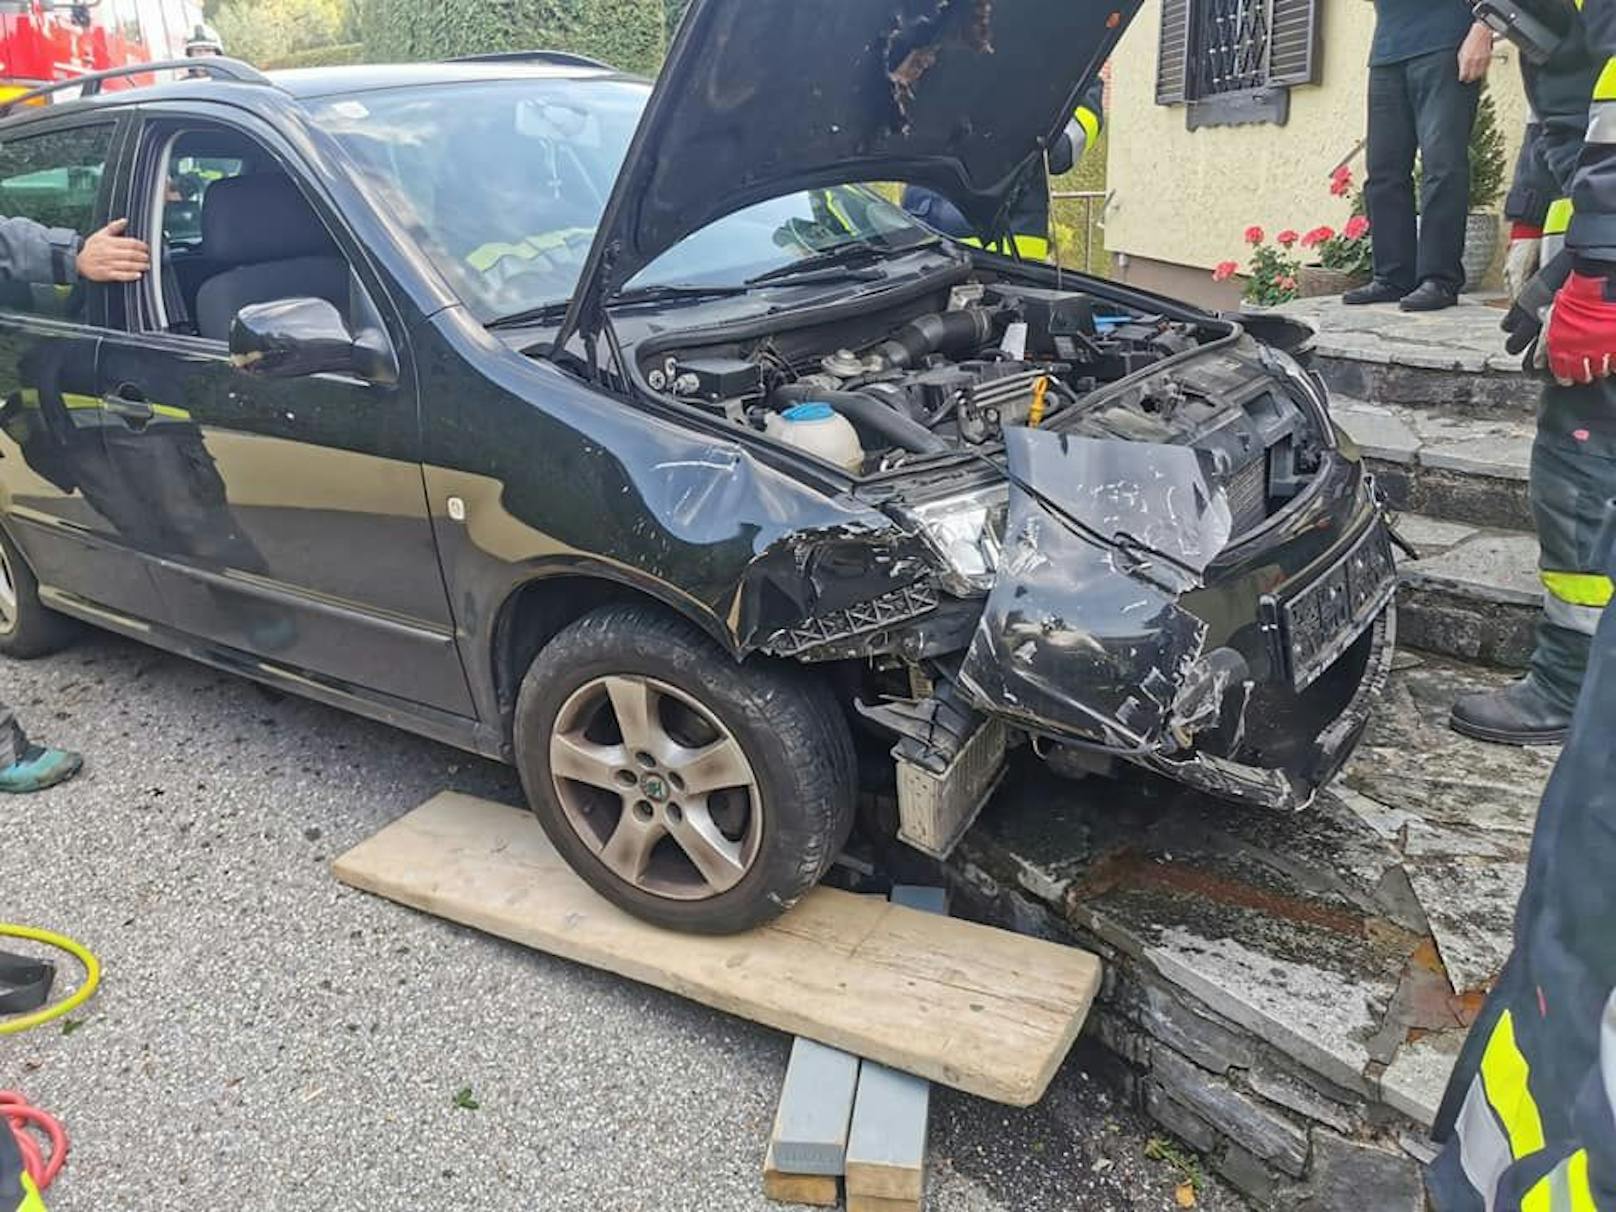 Starker Hustenanfall löst Verkehrsunfall aus